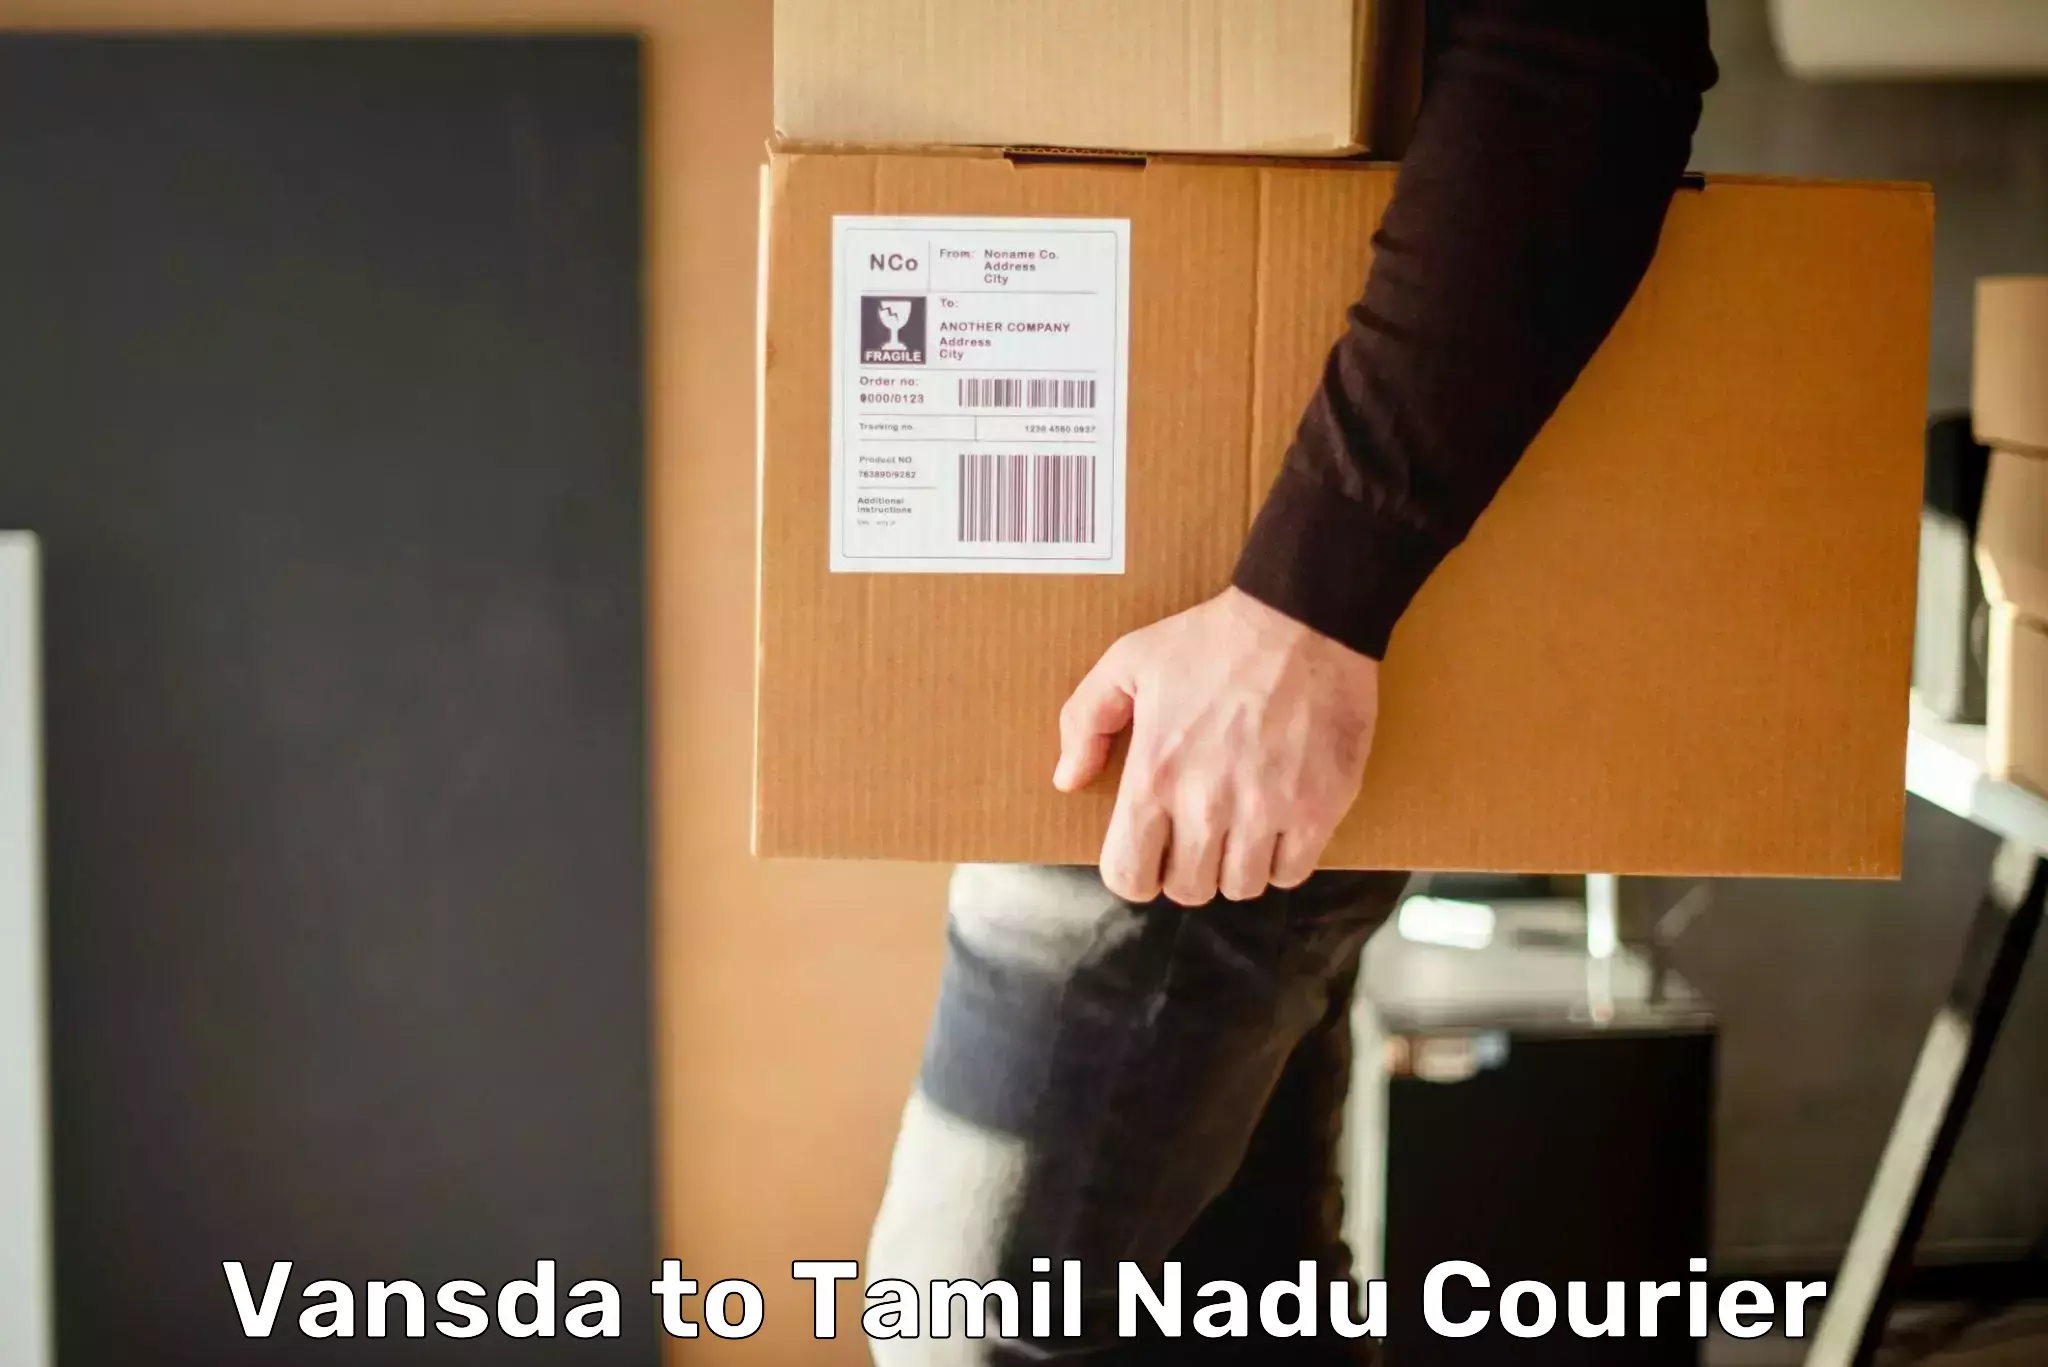 Expedited shipping methods Vansda to Madurai